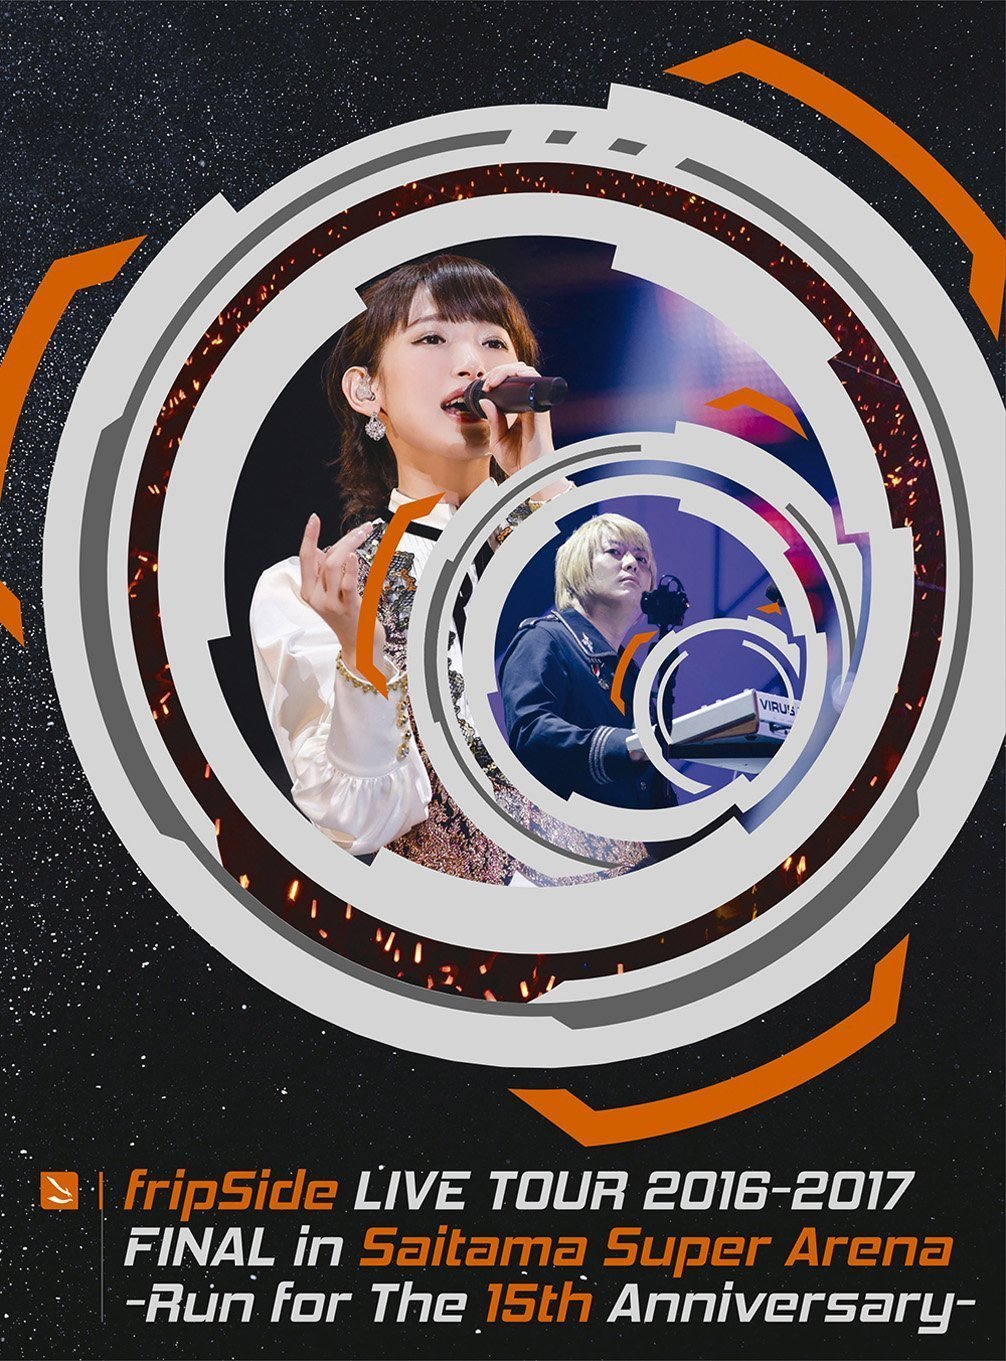 fripSide LIVE TOUR 2016-2017 FINAL in Saitama Super Arena -Run for